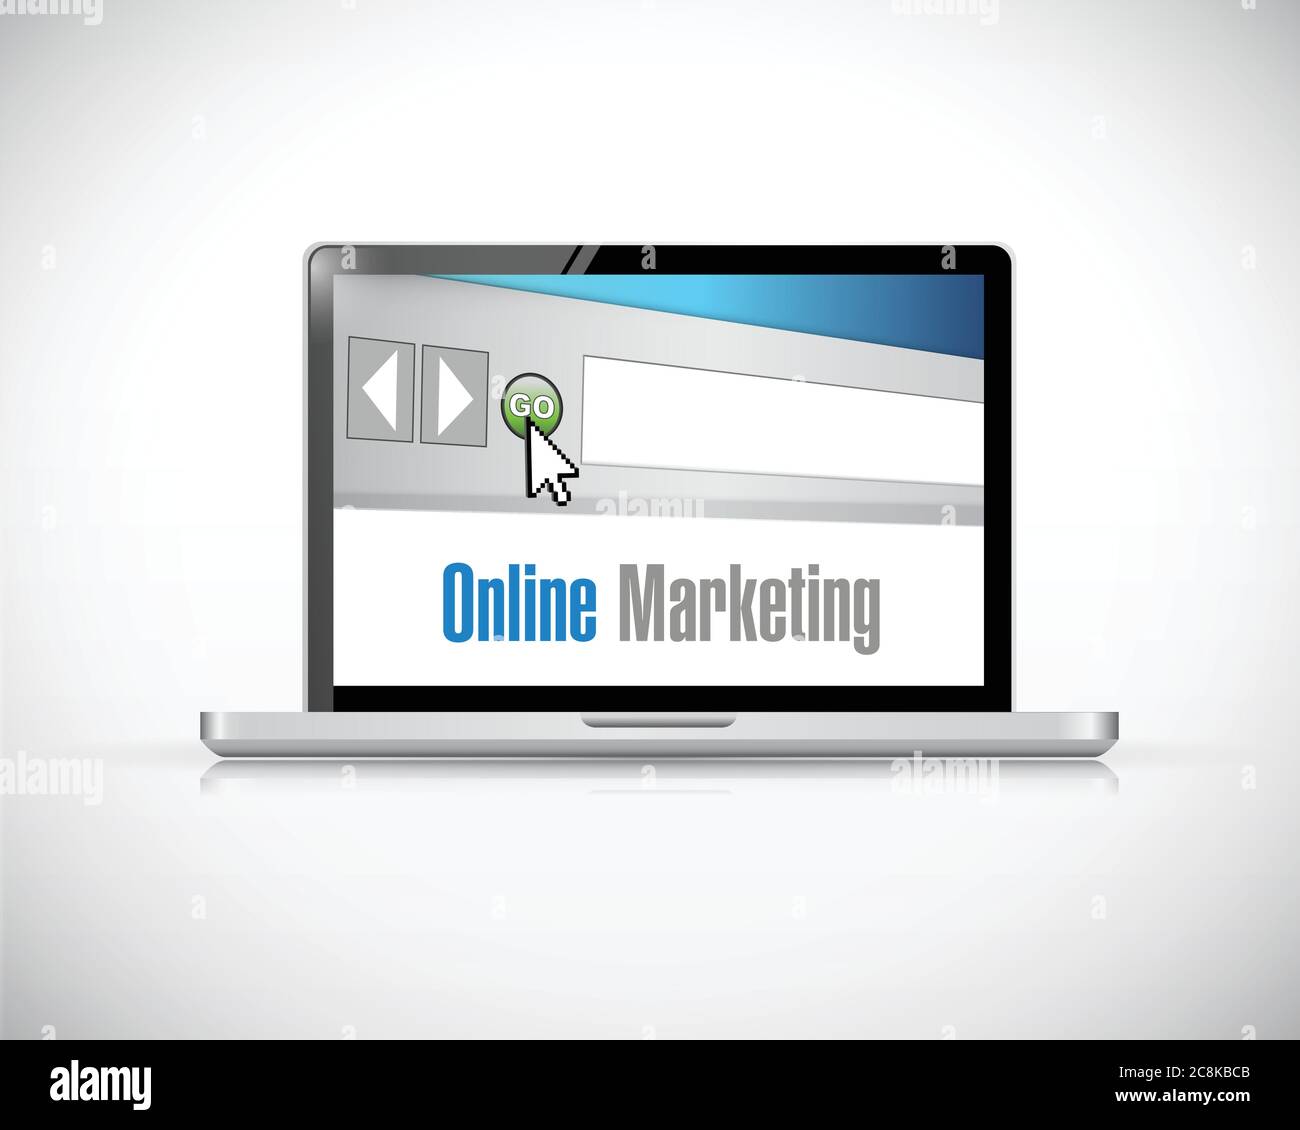 Online marketing computer sign concept illustration design over a white background Stock Vector